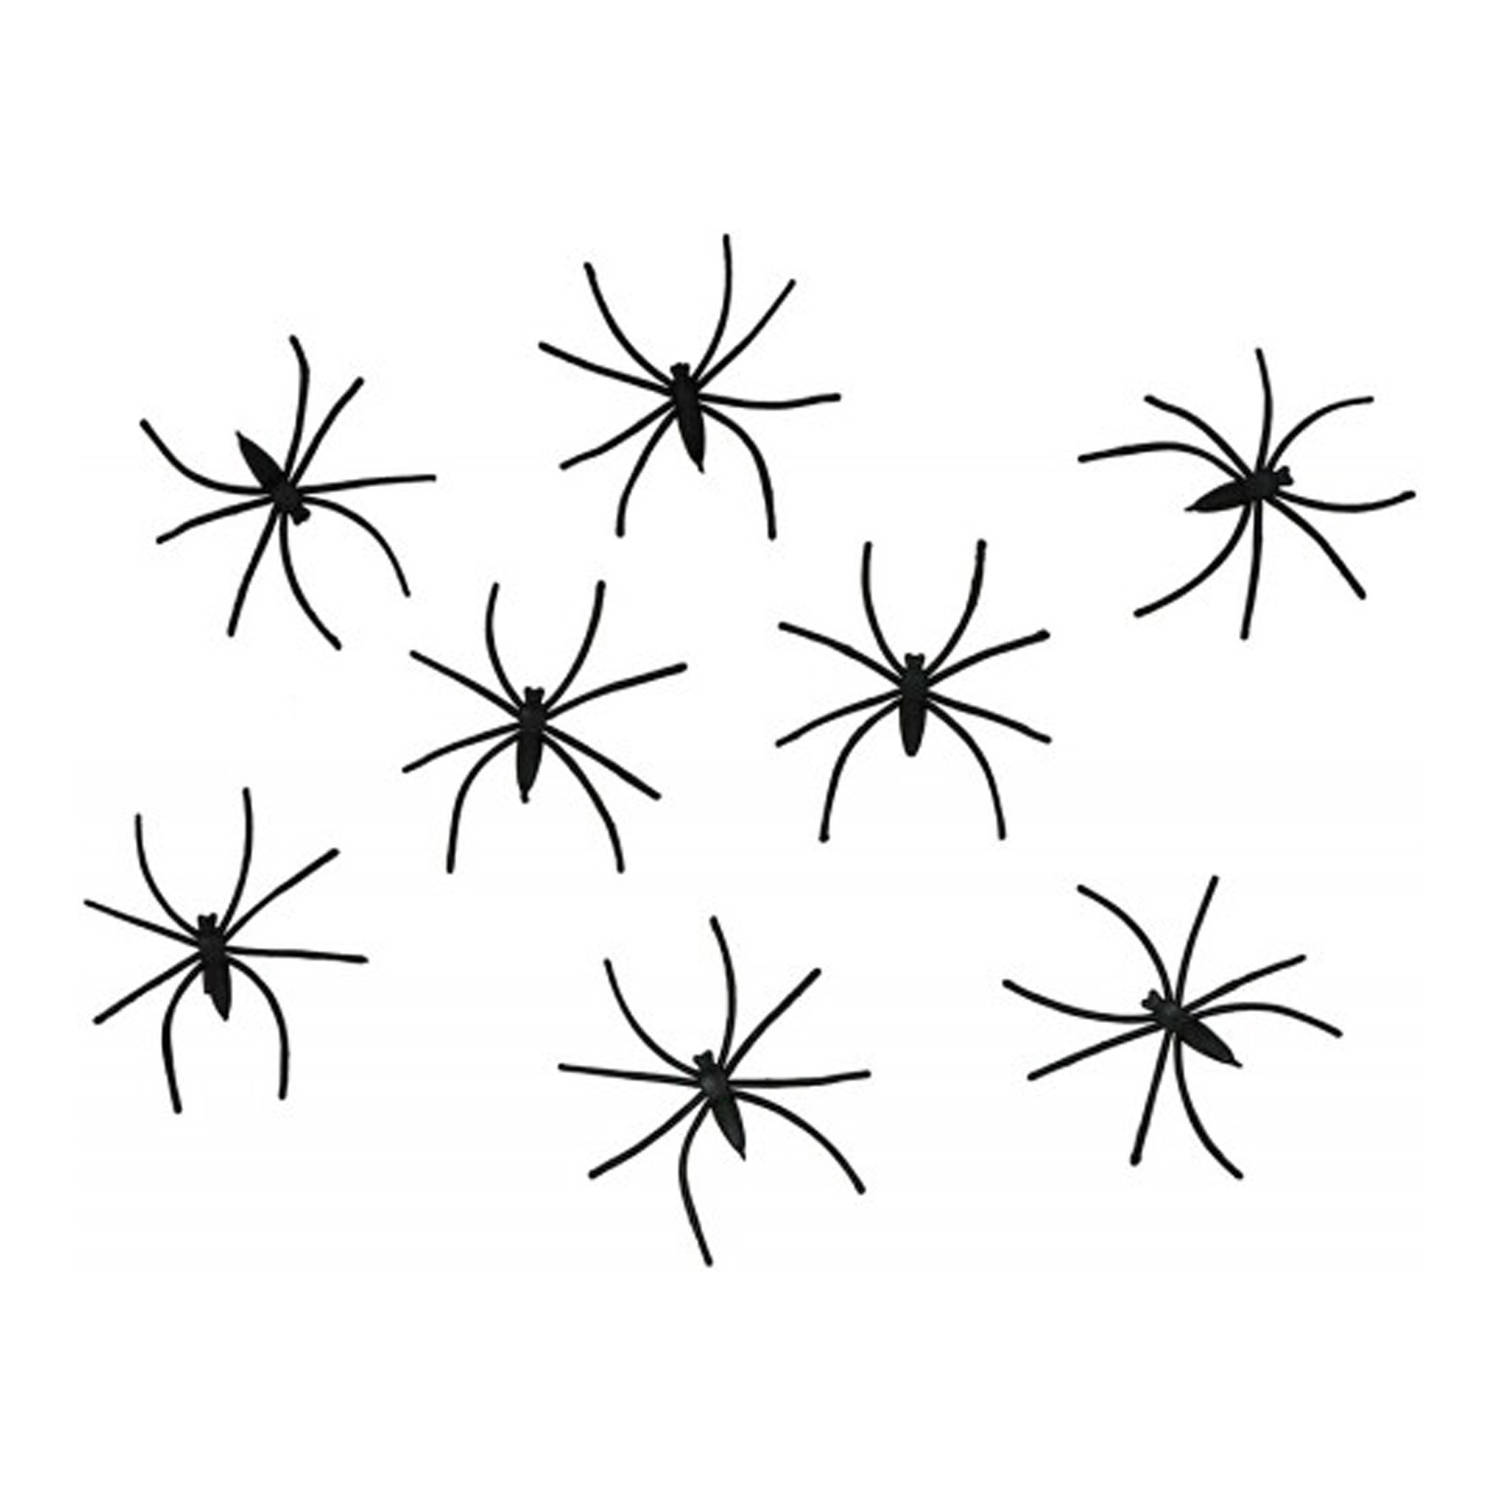 Halloween Chaks nep spinnen/spinnetjes 4 cm - zwart - 24x - Horror/Halloween thema decoratie beestjes